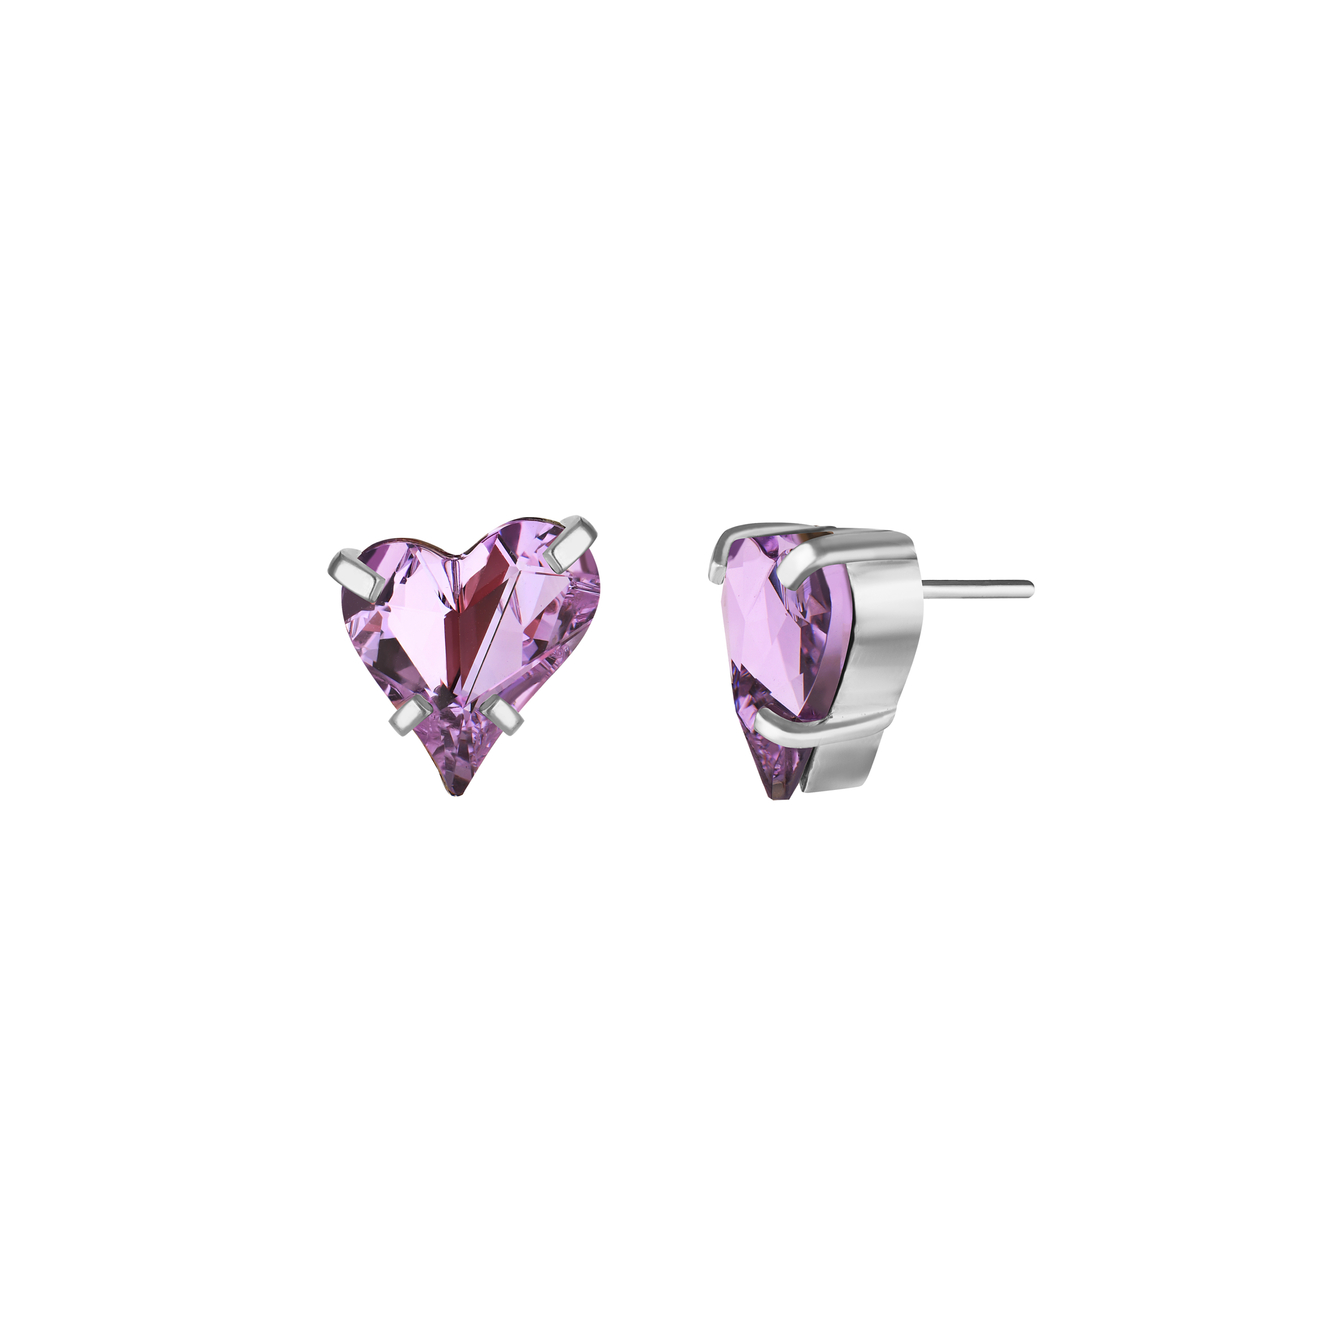 Phenomenal Studio Серьги-сердца Love.Violet Earrings с кристаллами phenomenal studio серьги сердца с кристаллами sweetheart